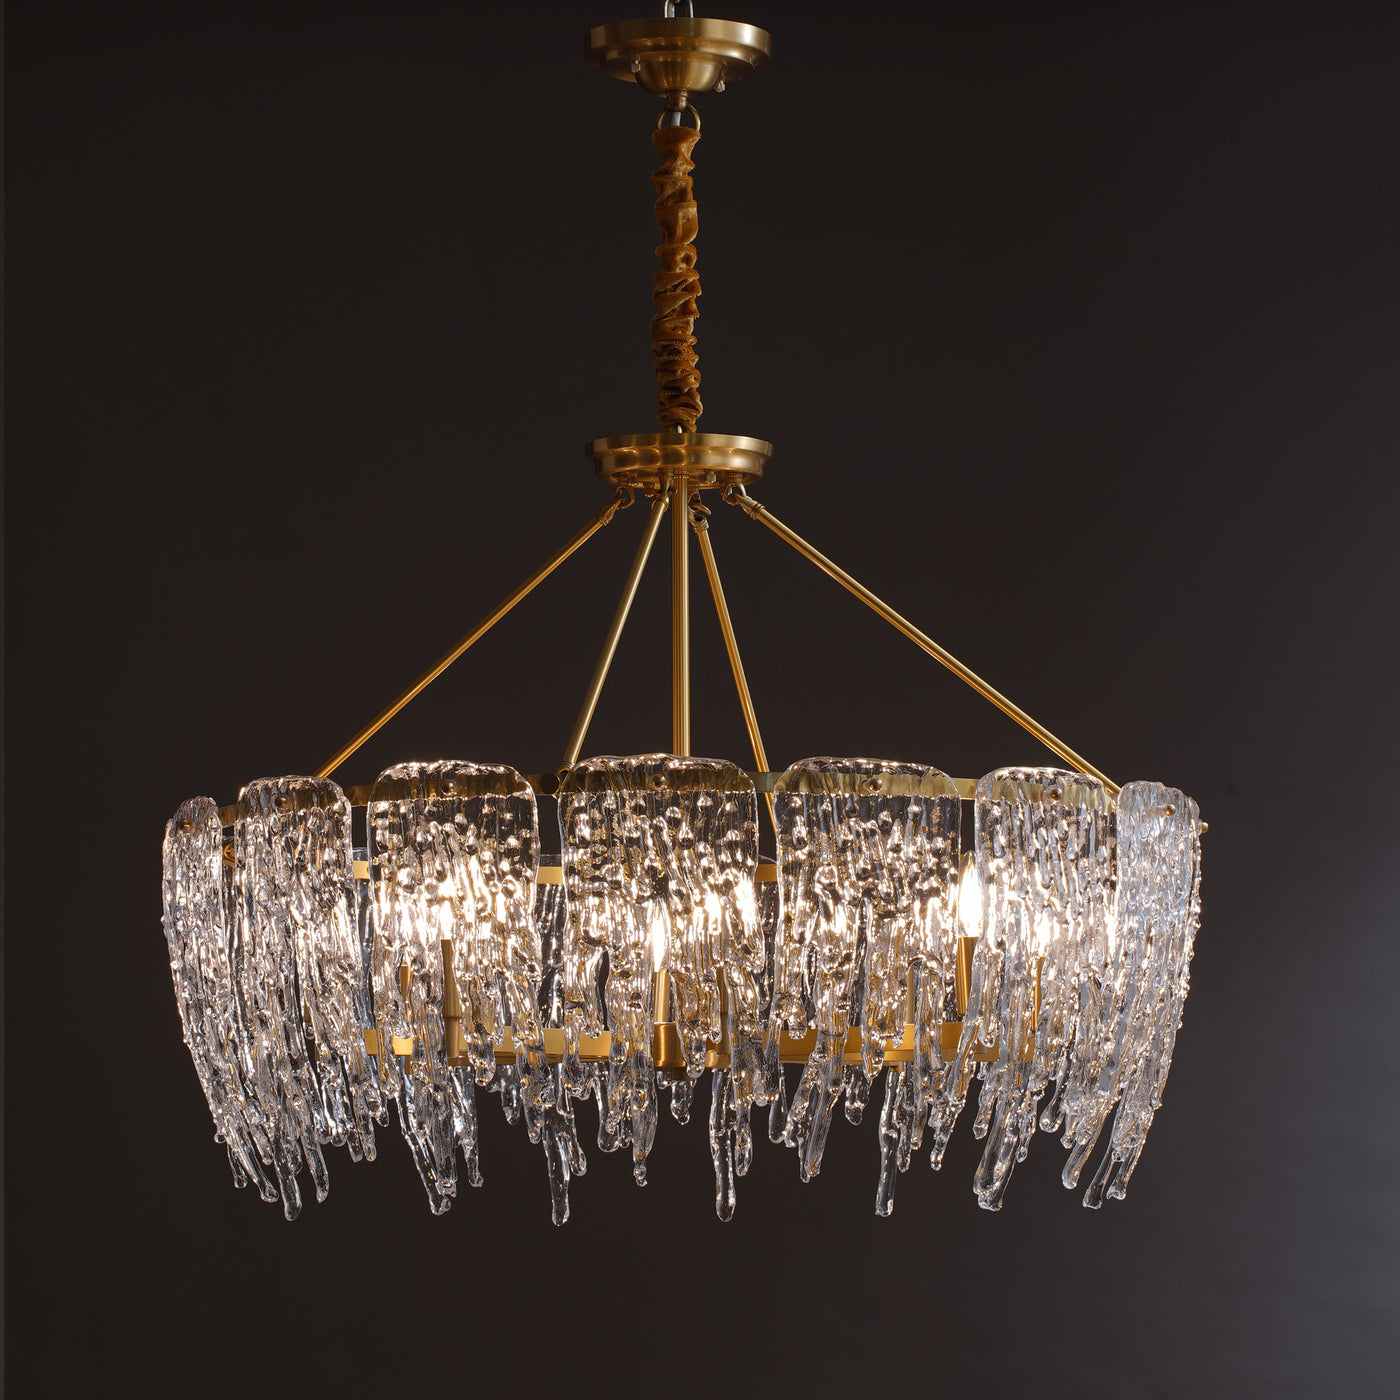 Postmodern luxury and full copper raindrop chandelier